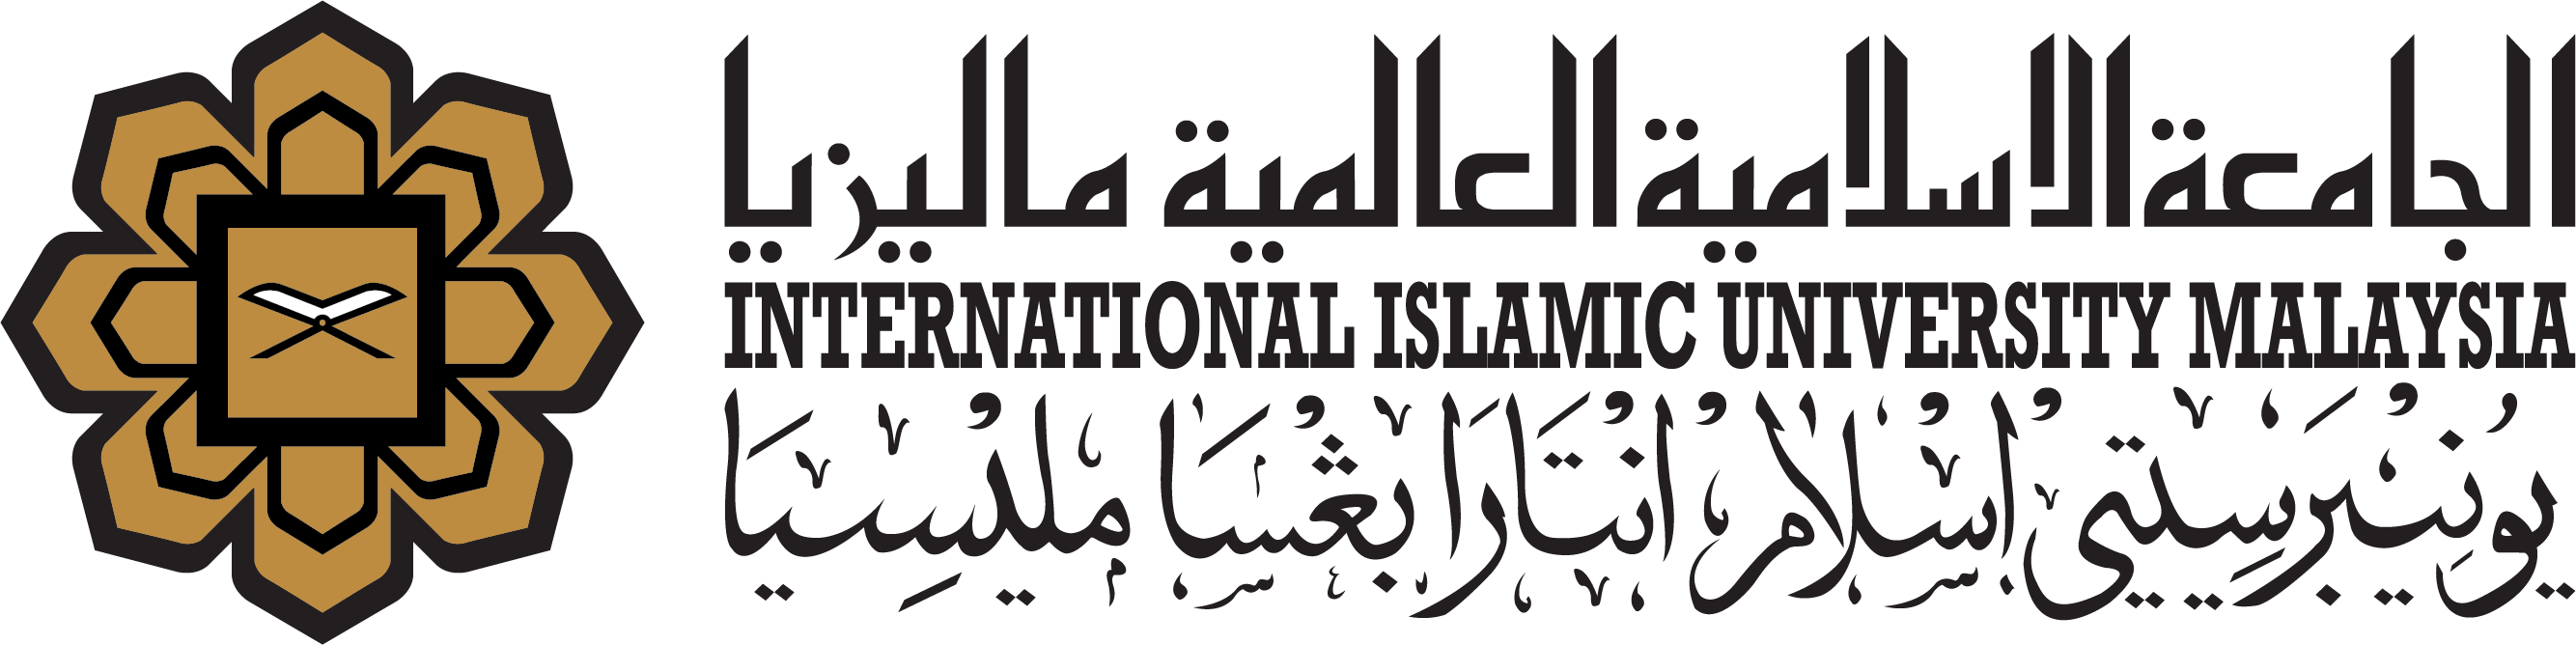 Download - International Islamic University Malaysia Logo Png (2668x668), Png Download